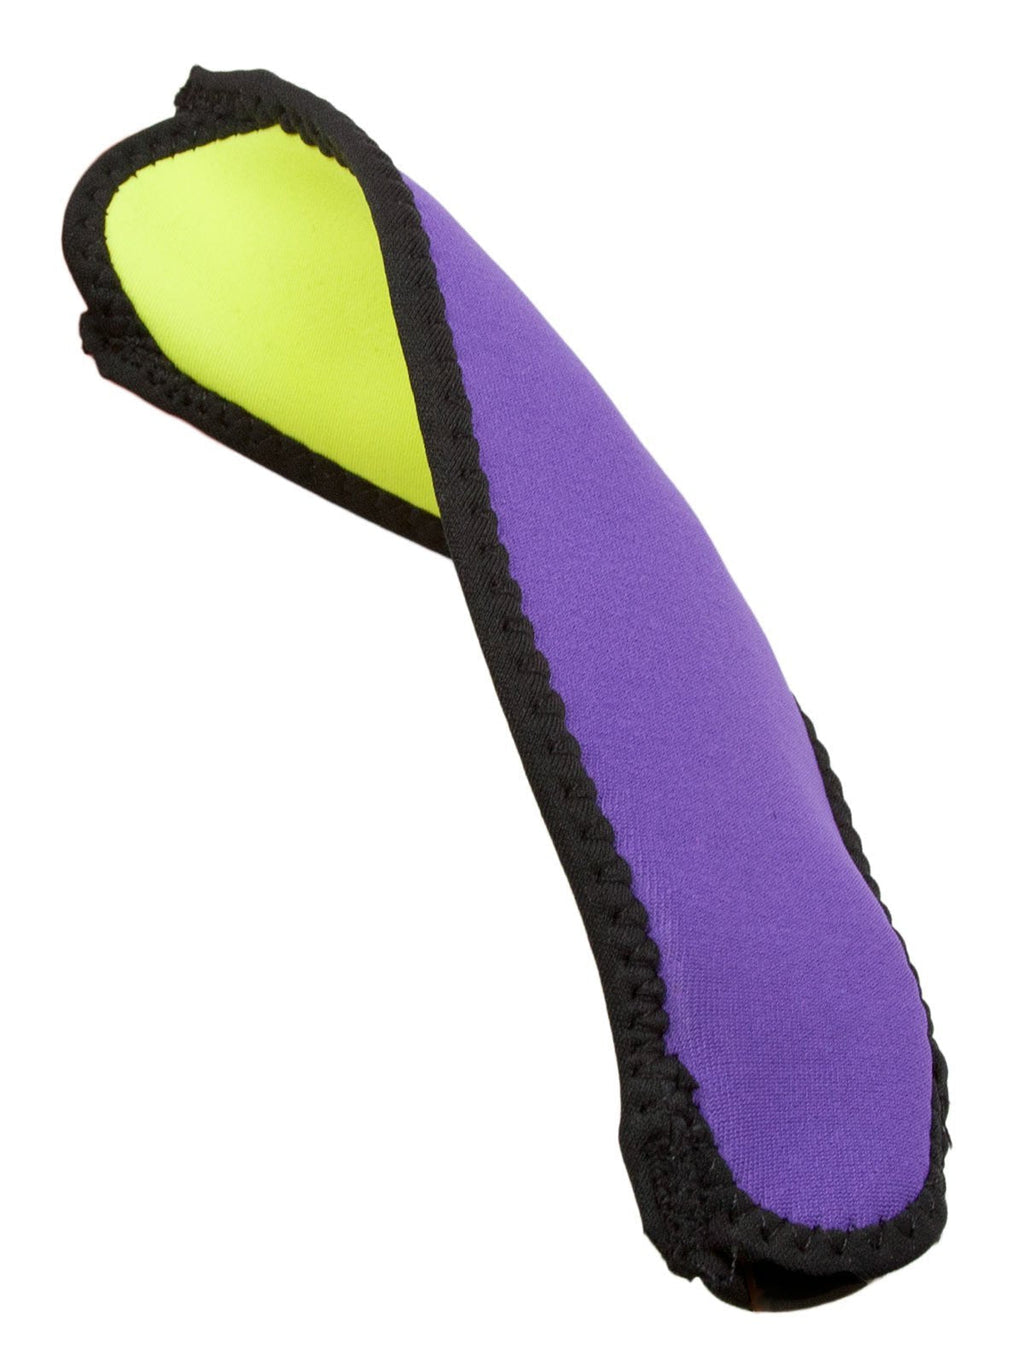 [AUSTRALIA] - Innovative Strap Wrapper Neoprene Mask Strap Cover Purple/Yellow Reversible 